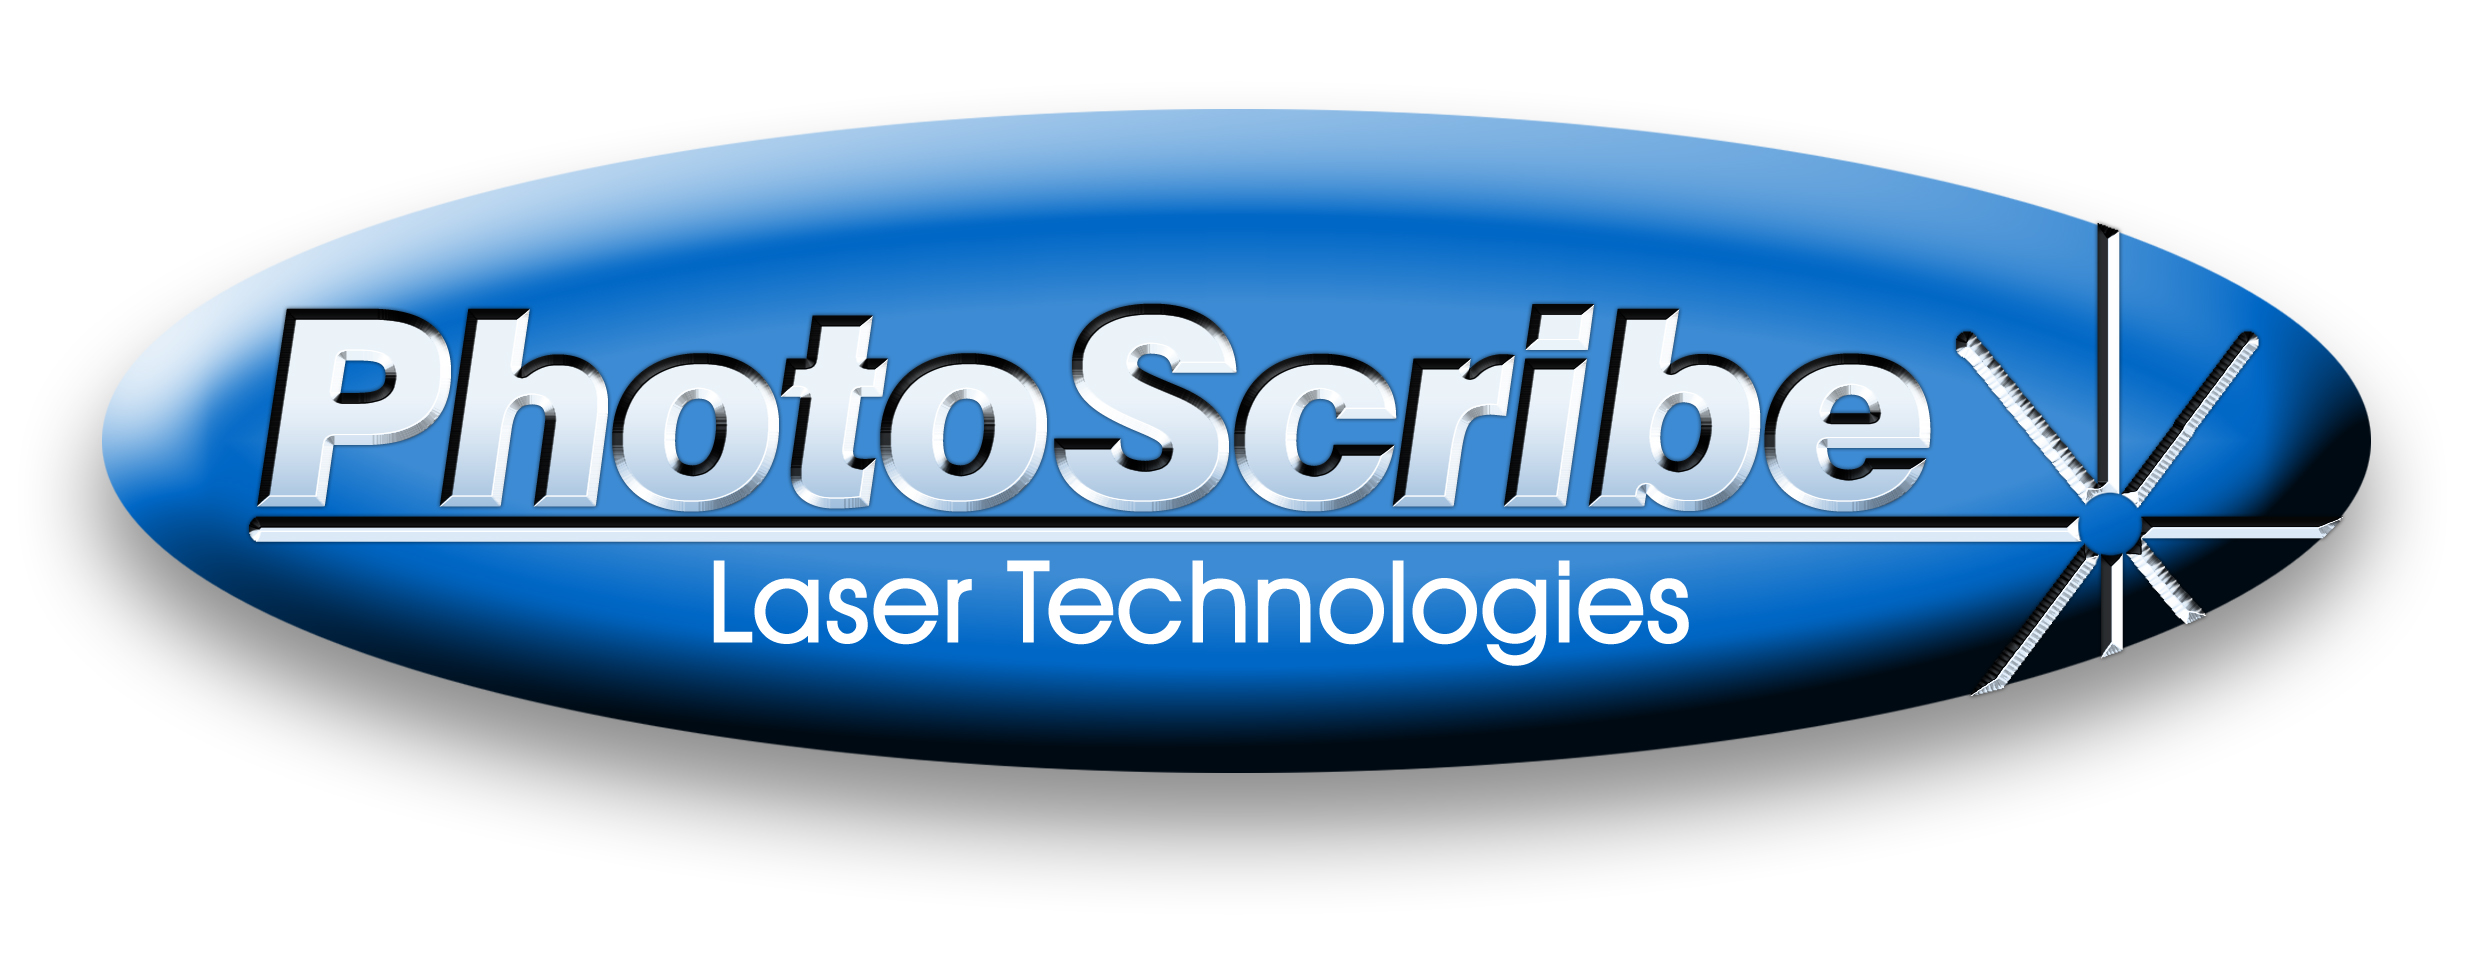 PhotoScribe Technologies